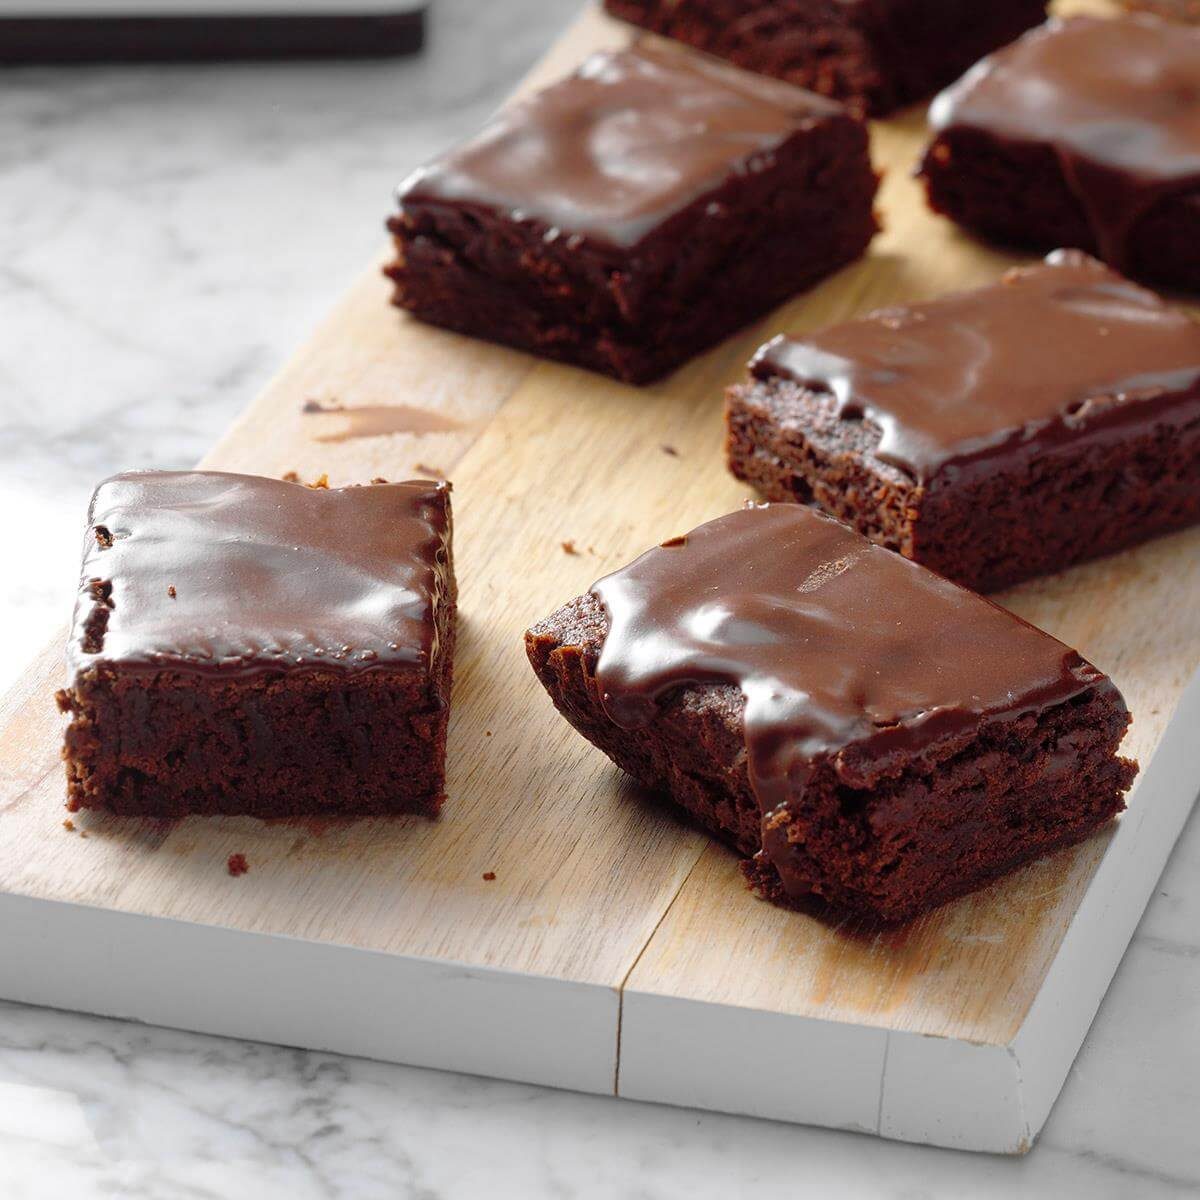 8 Mistakes Everyone Makes When Baking Brownies | Taste of Home